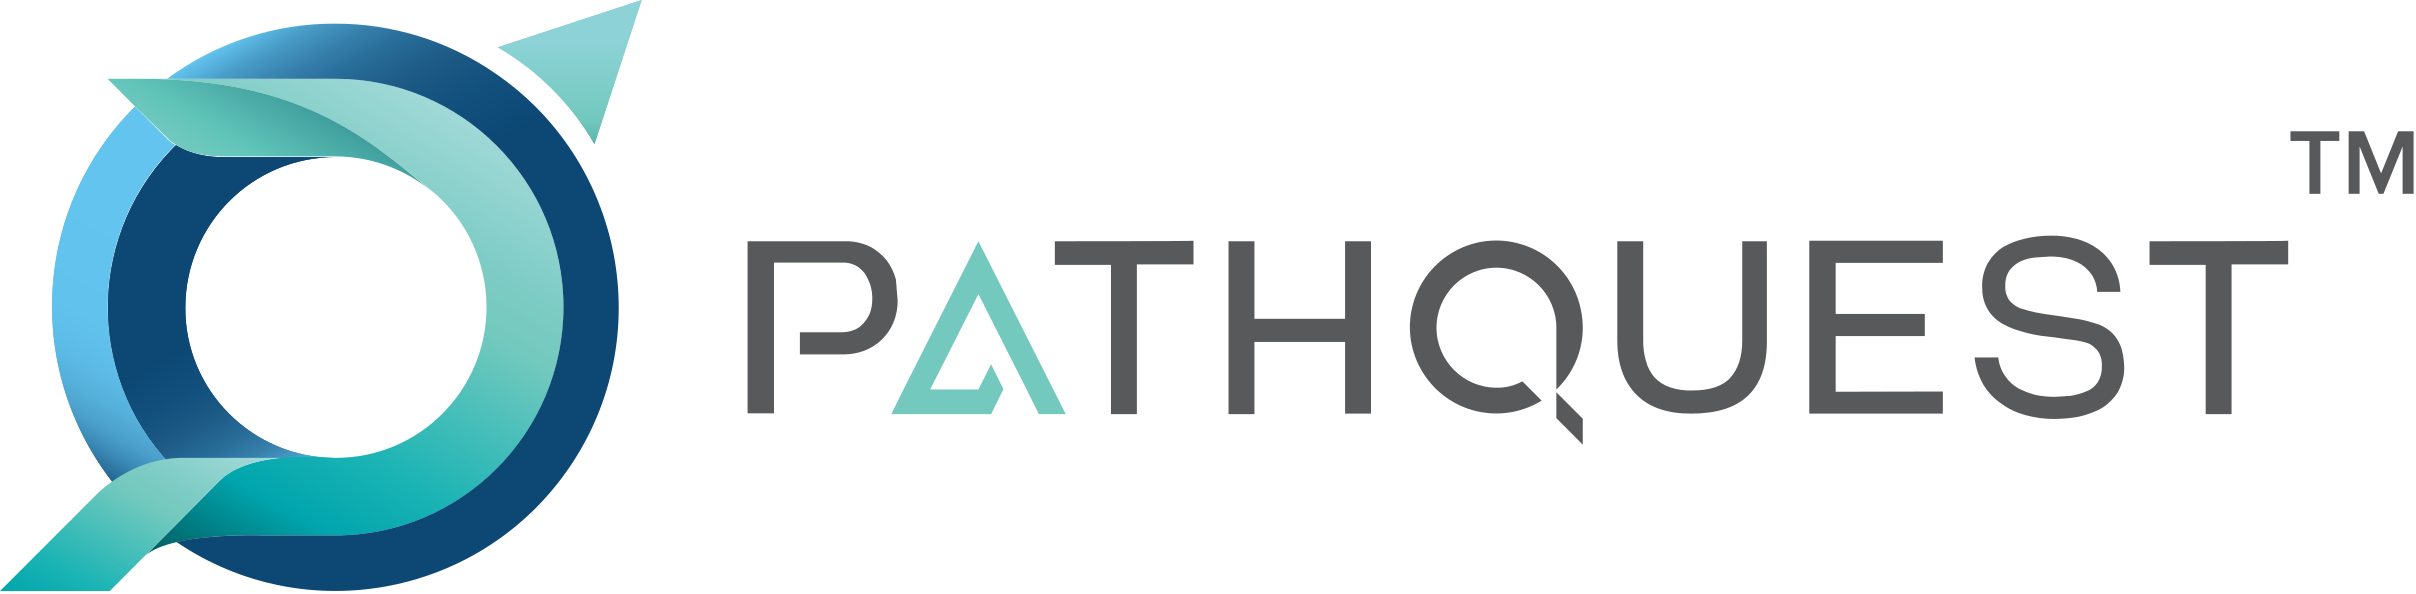 Company logo of Pathquest